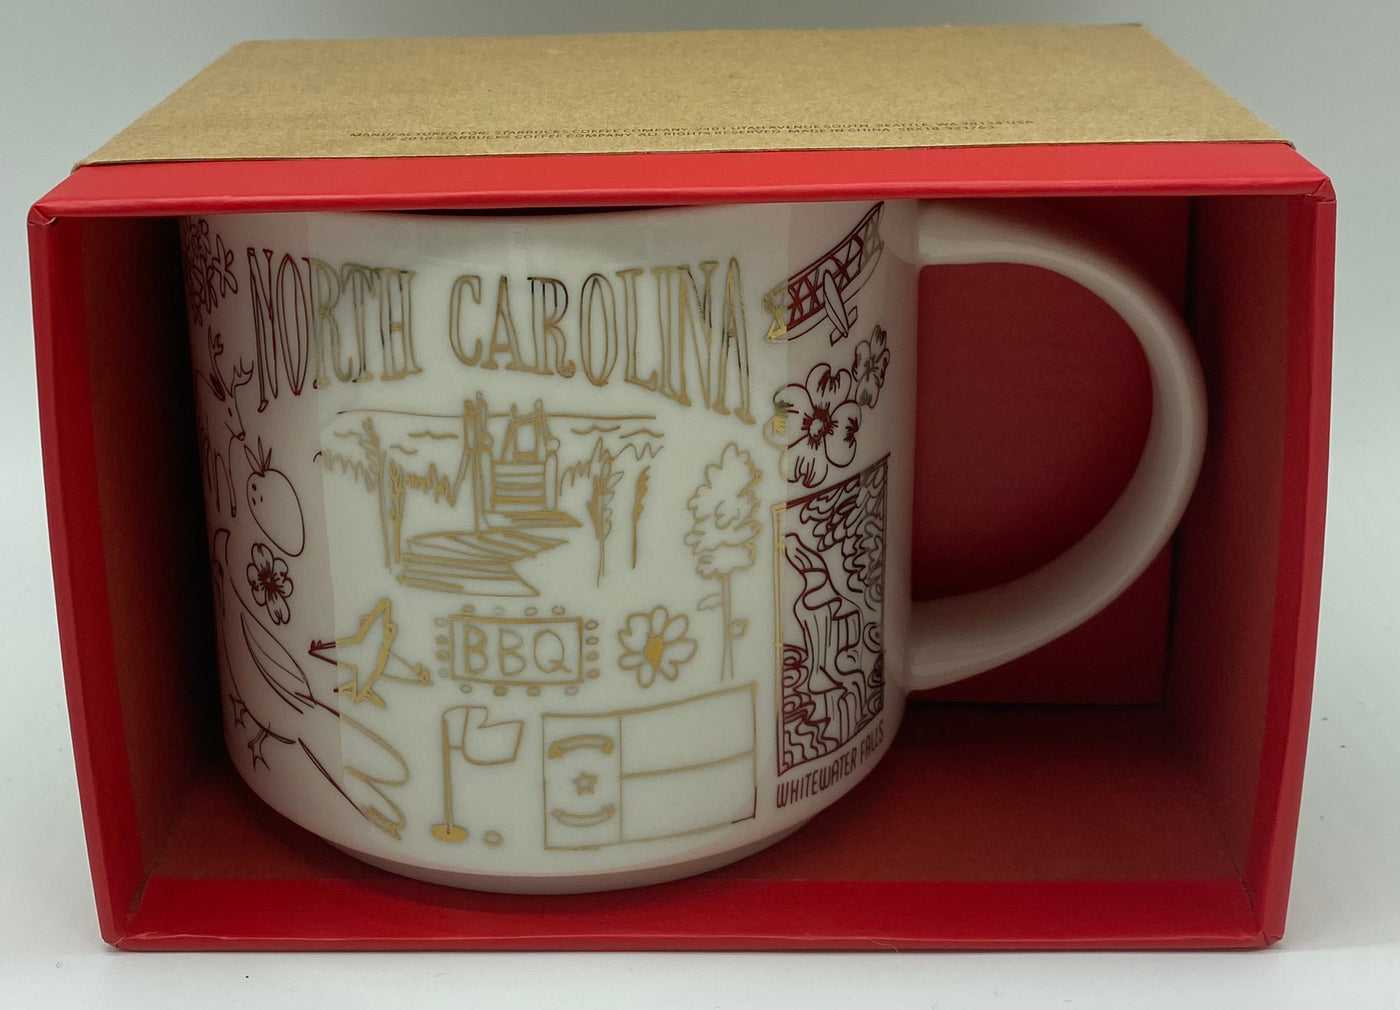 Starbucks Been There Series Holiday North Carolina Coffee Mug New With Box